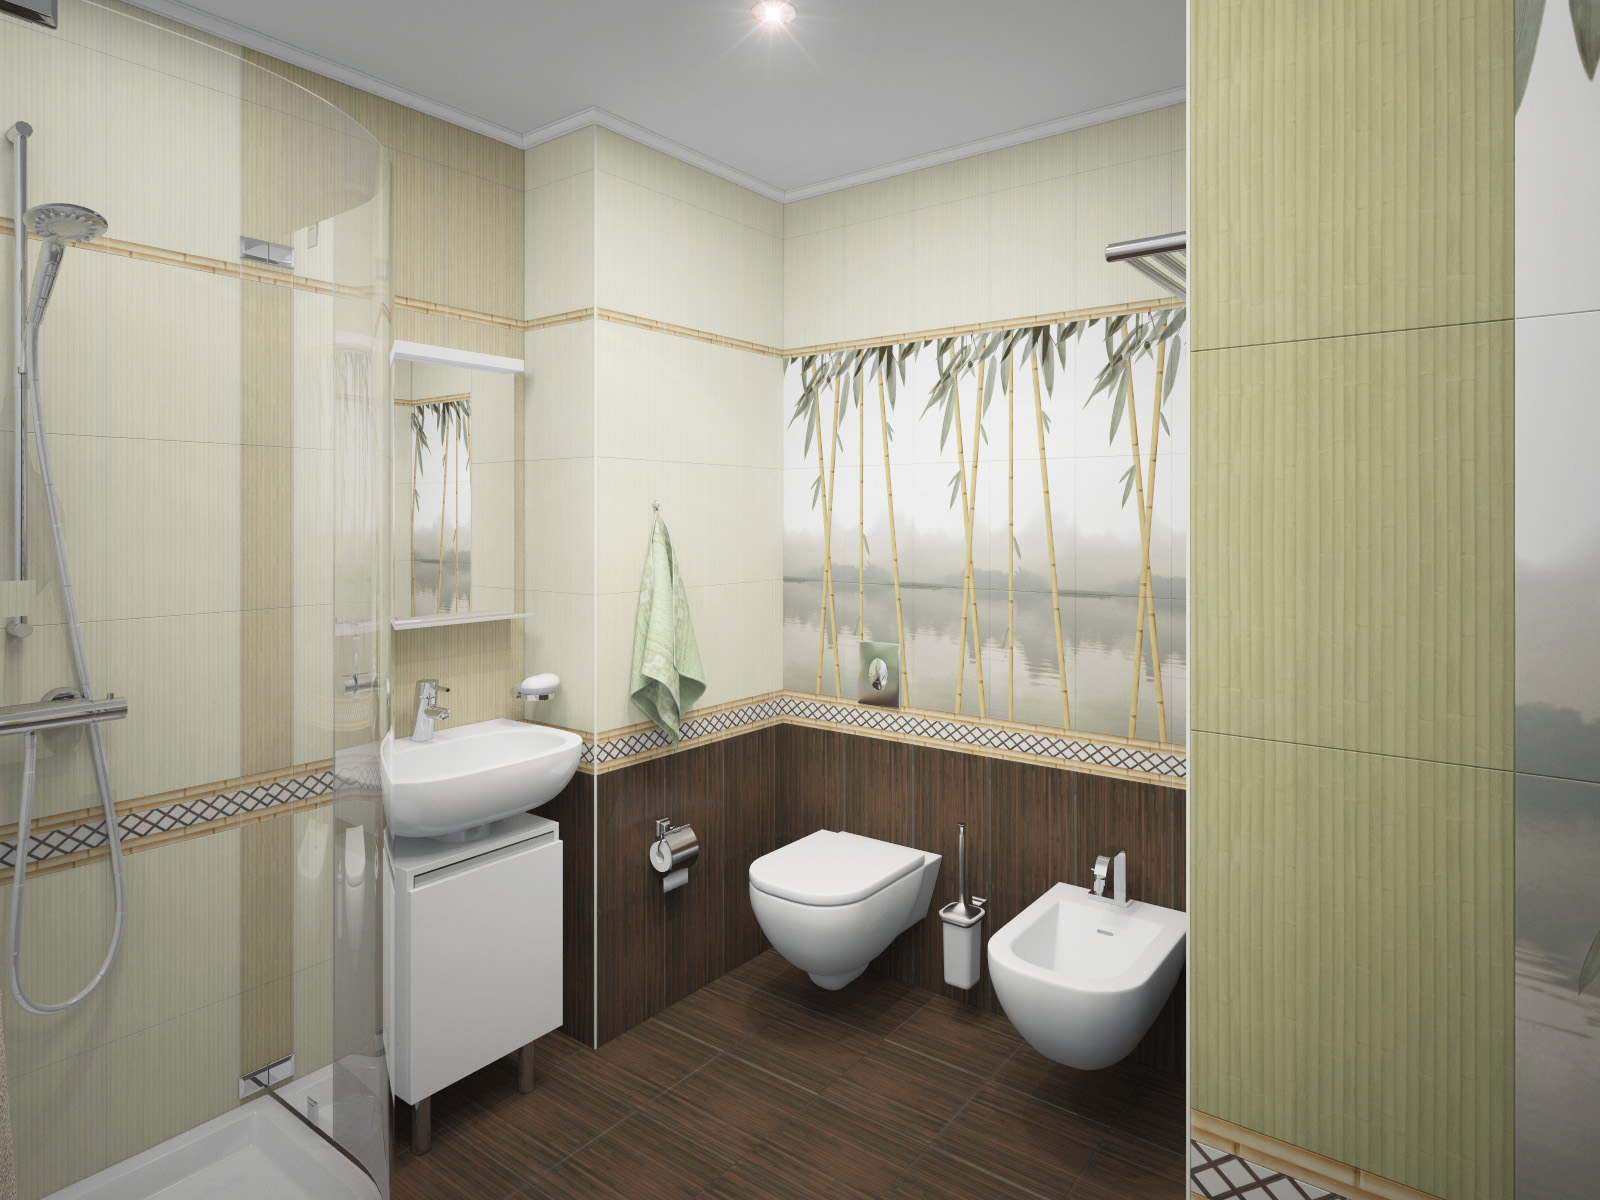 žaluzie s bambusem v designu ložnice